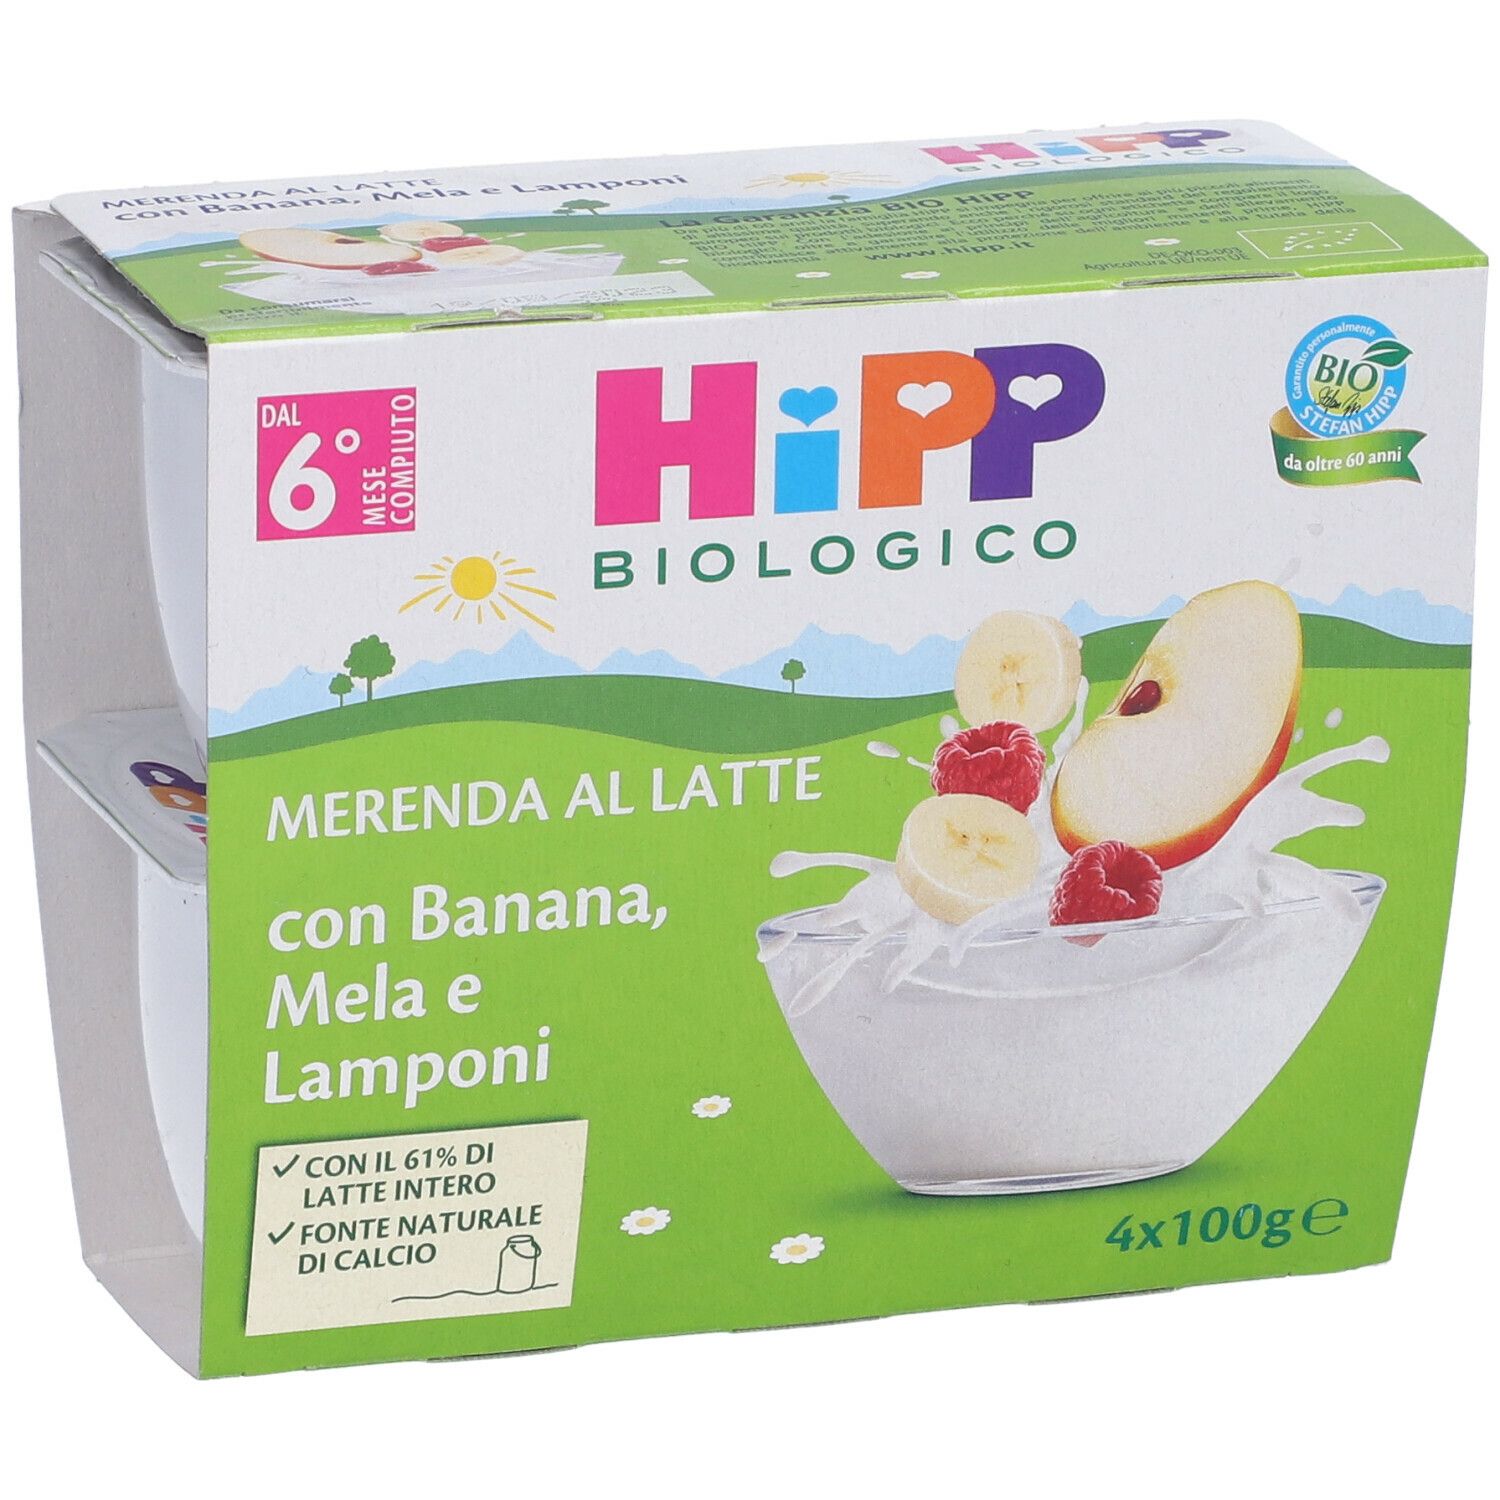 HiPP Biologico Merenda al Latte con Banana, Mela e Lamponi